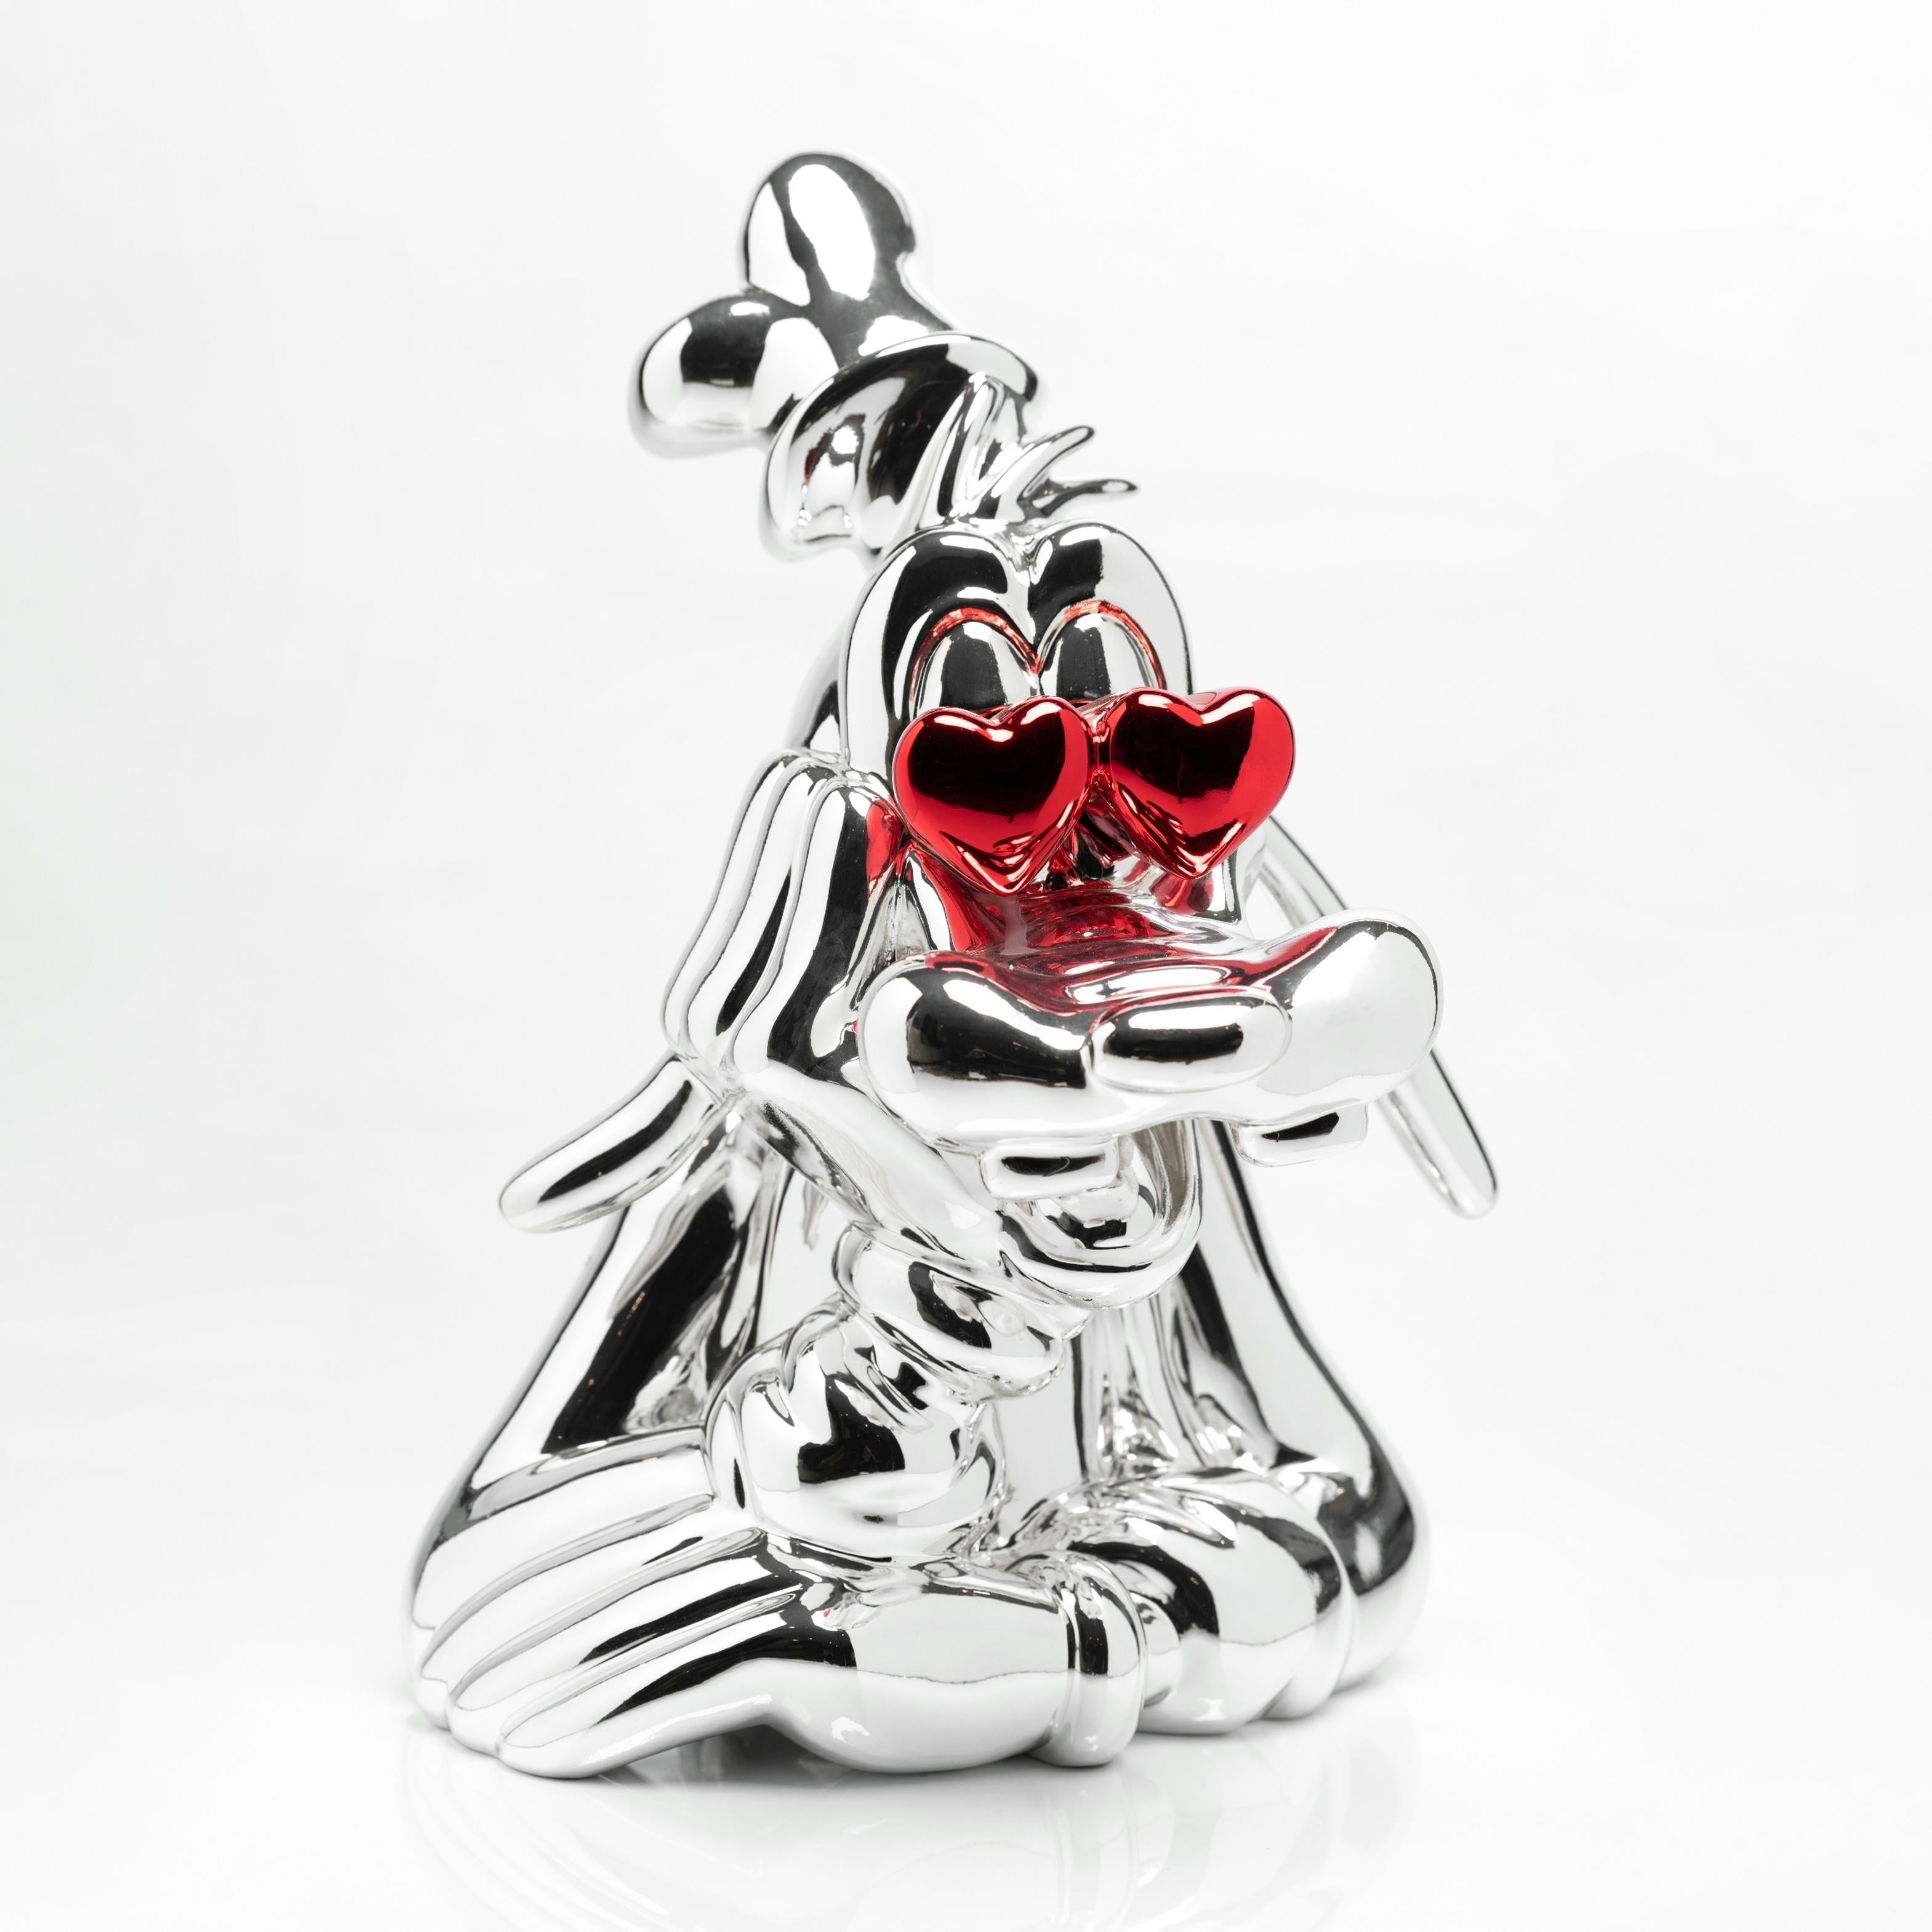 Goofy In Love-original Disney modern realism sculpture-contemporary artwork - Contemporary Sculpture by Sanuj Birla